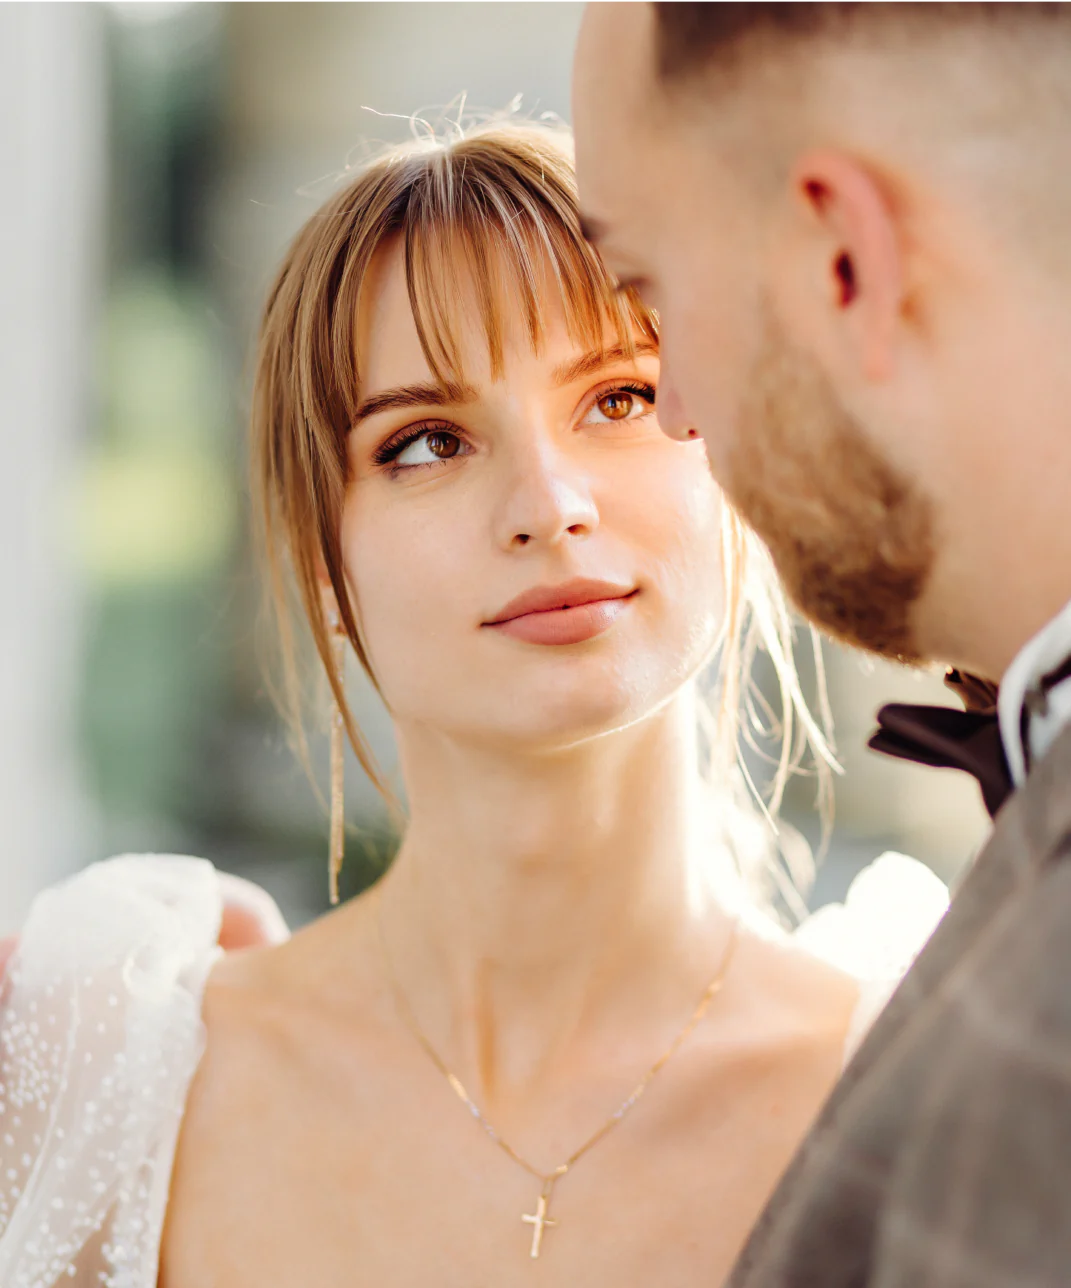 Blonde girl gazing into her boyfriend's eyes, showcasing a beautiful silver necklace.